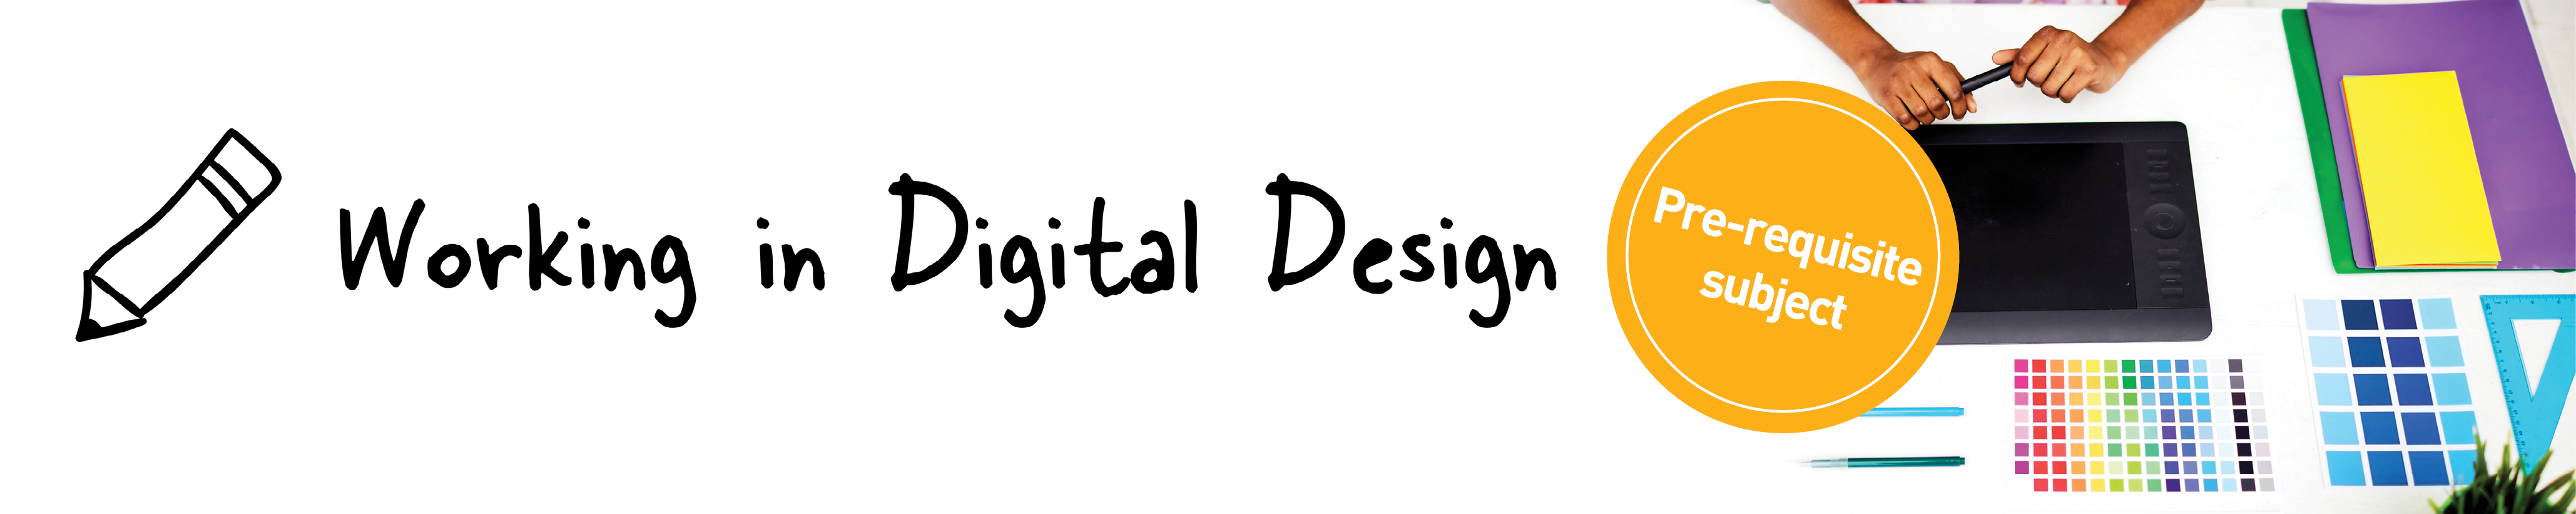 Working in Digital Design